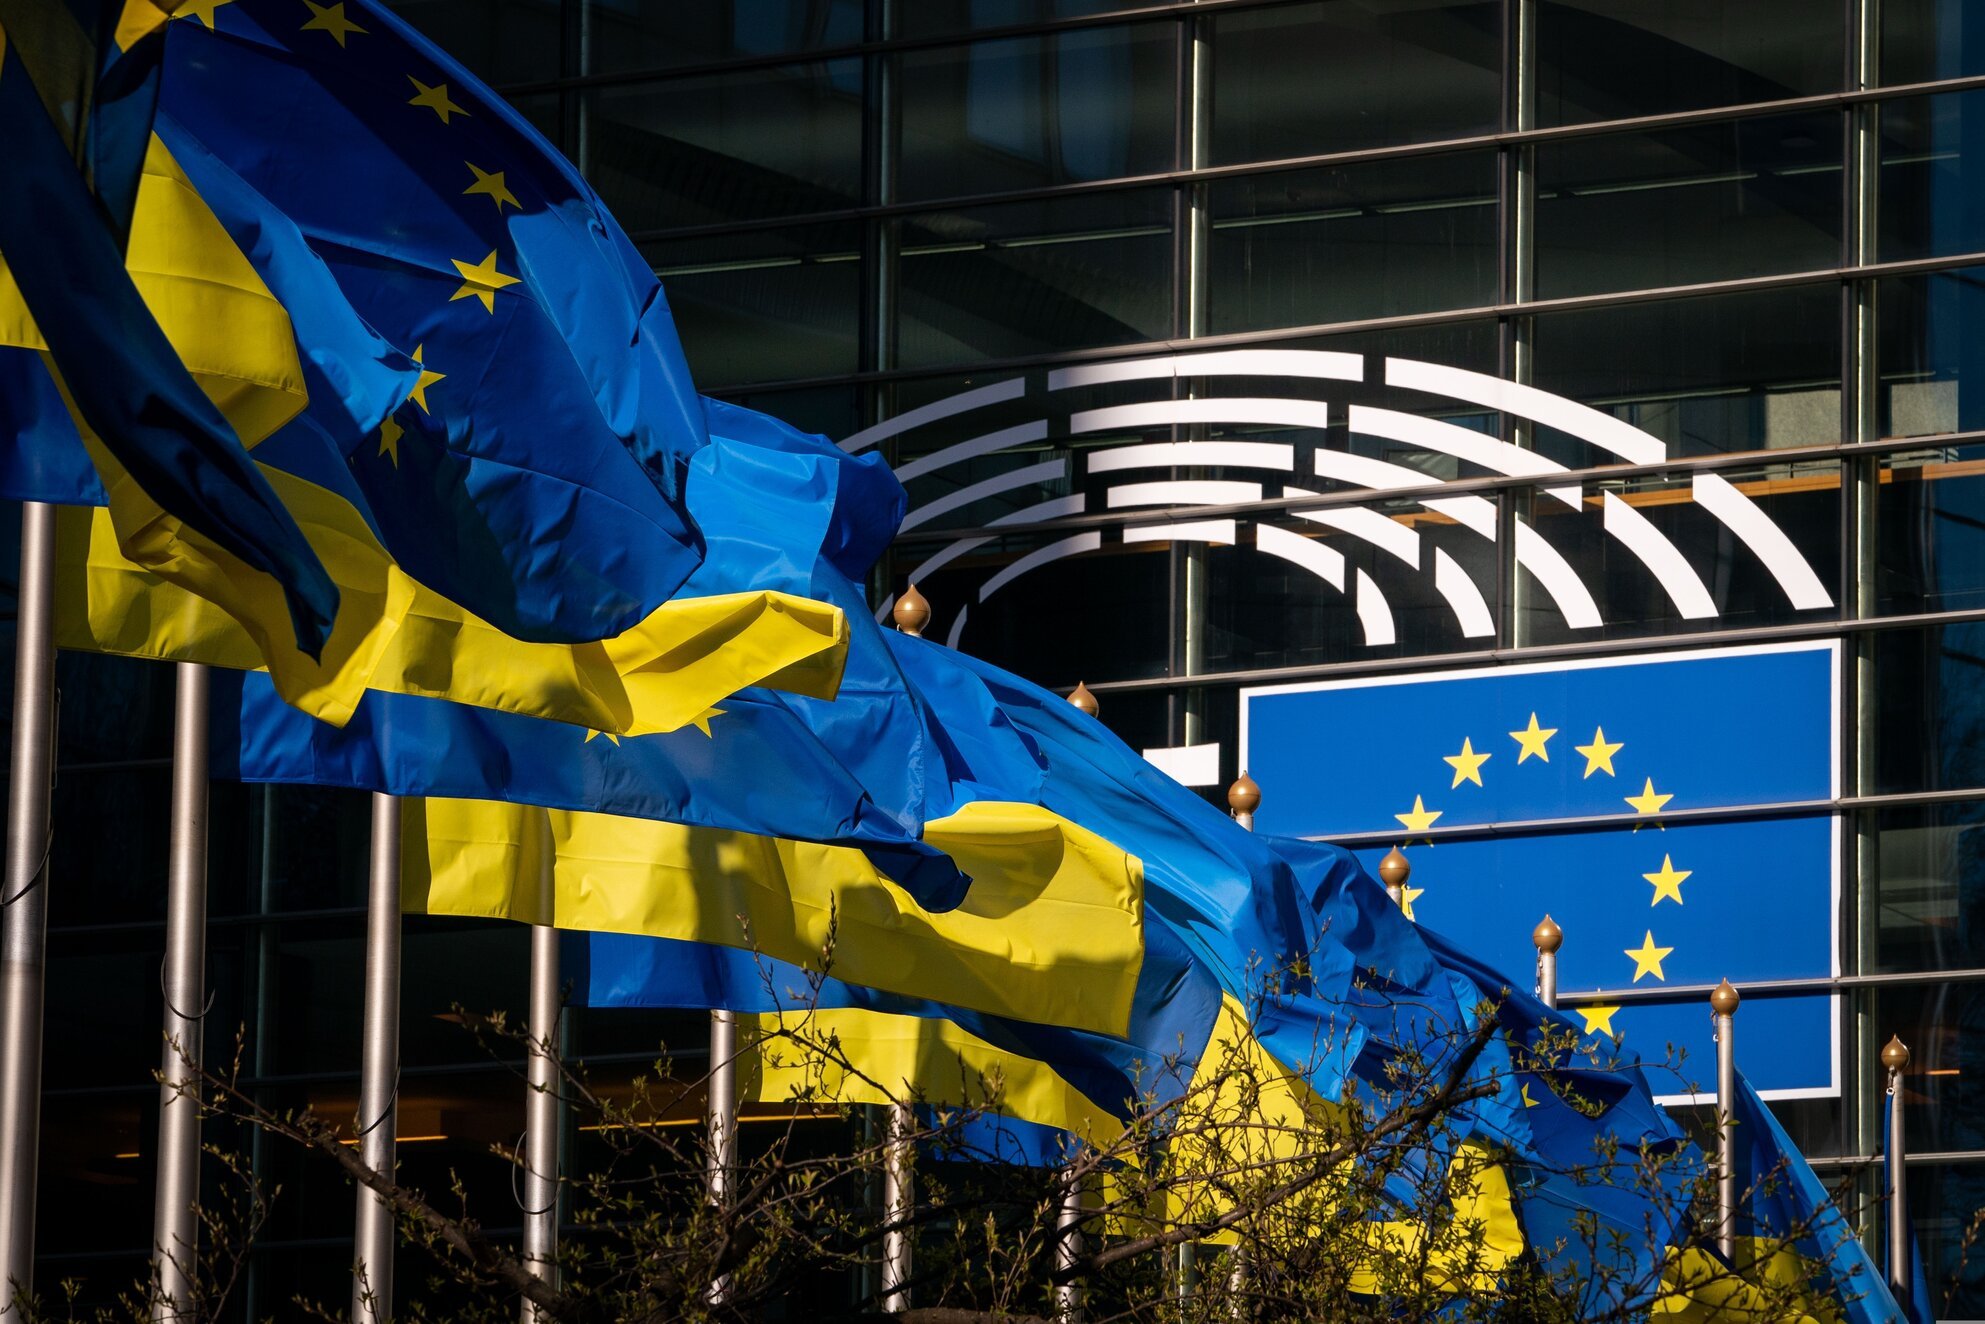 Europeans favor Ukraine’s EU accession over other states’, survey finds